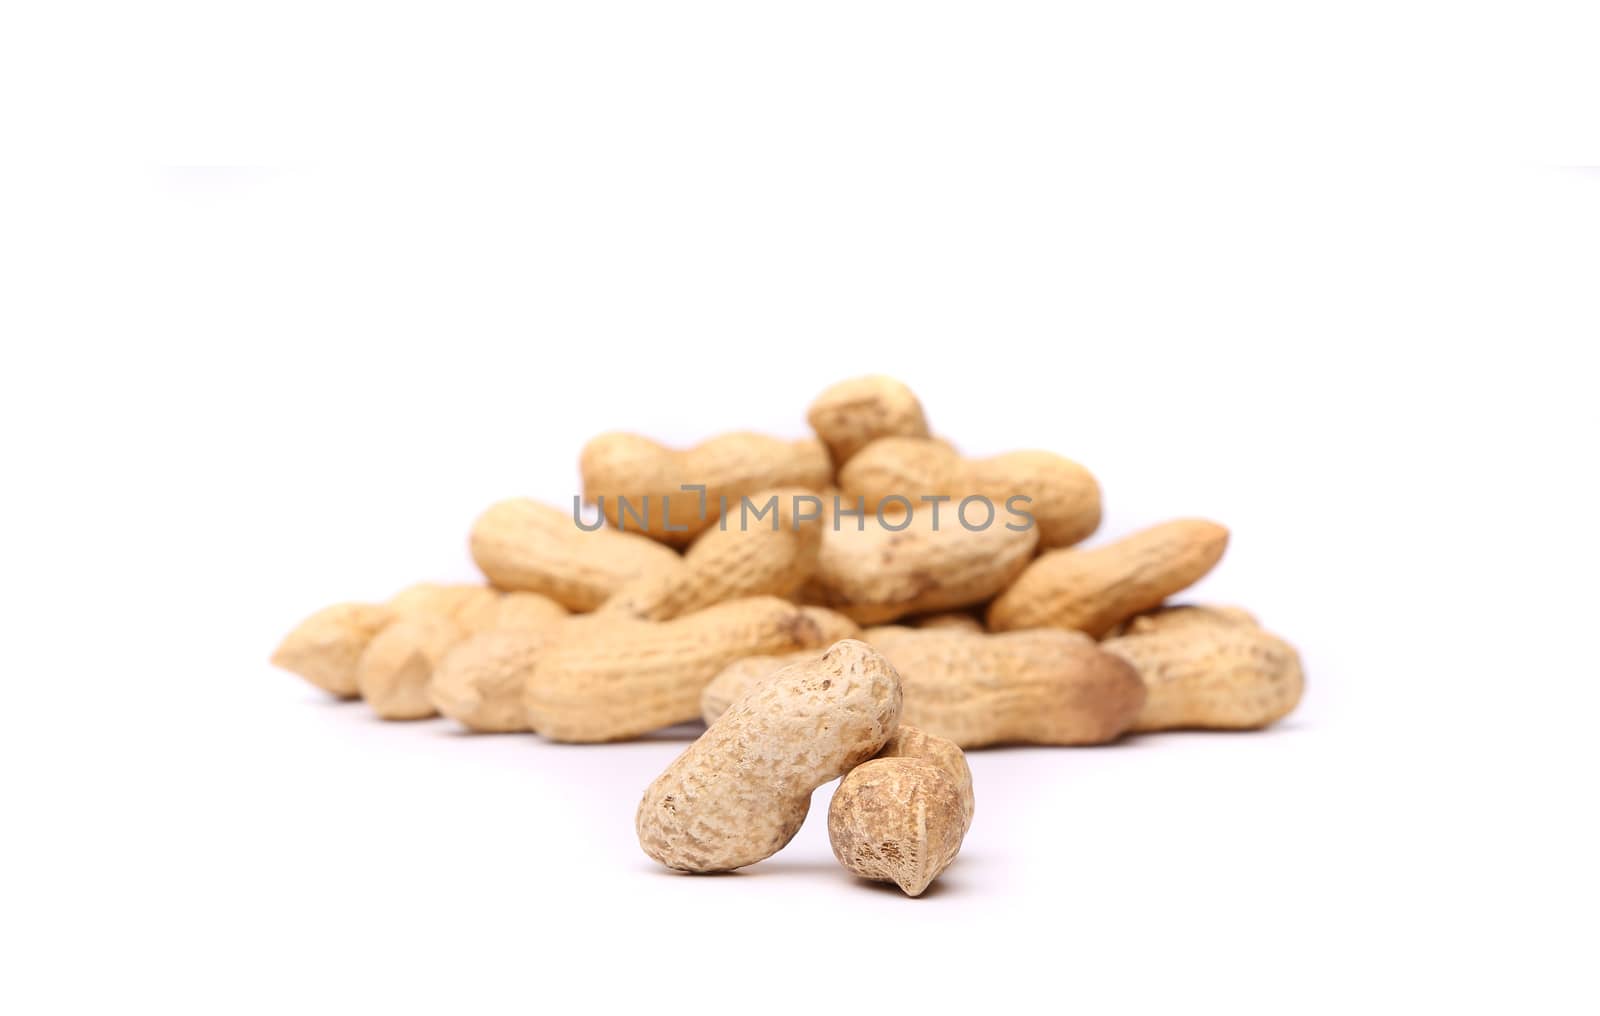 Two peanuts by indigolotos